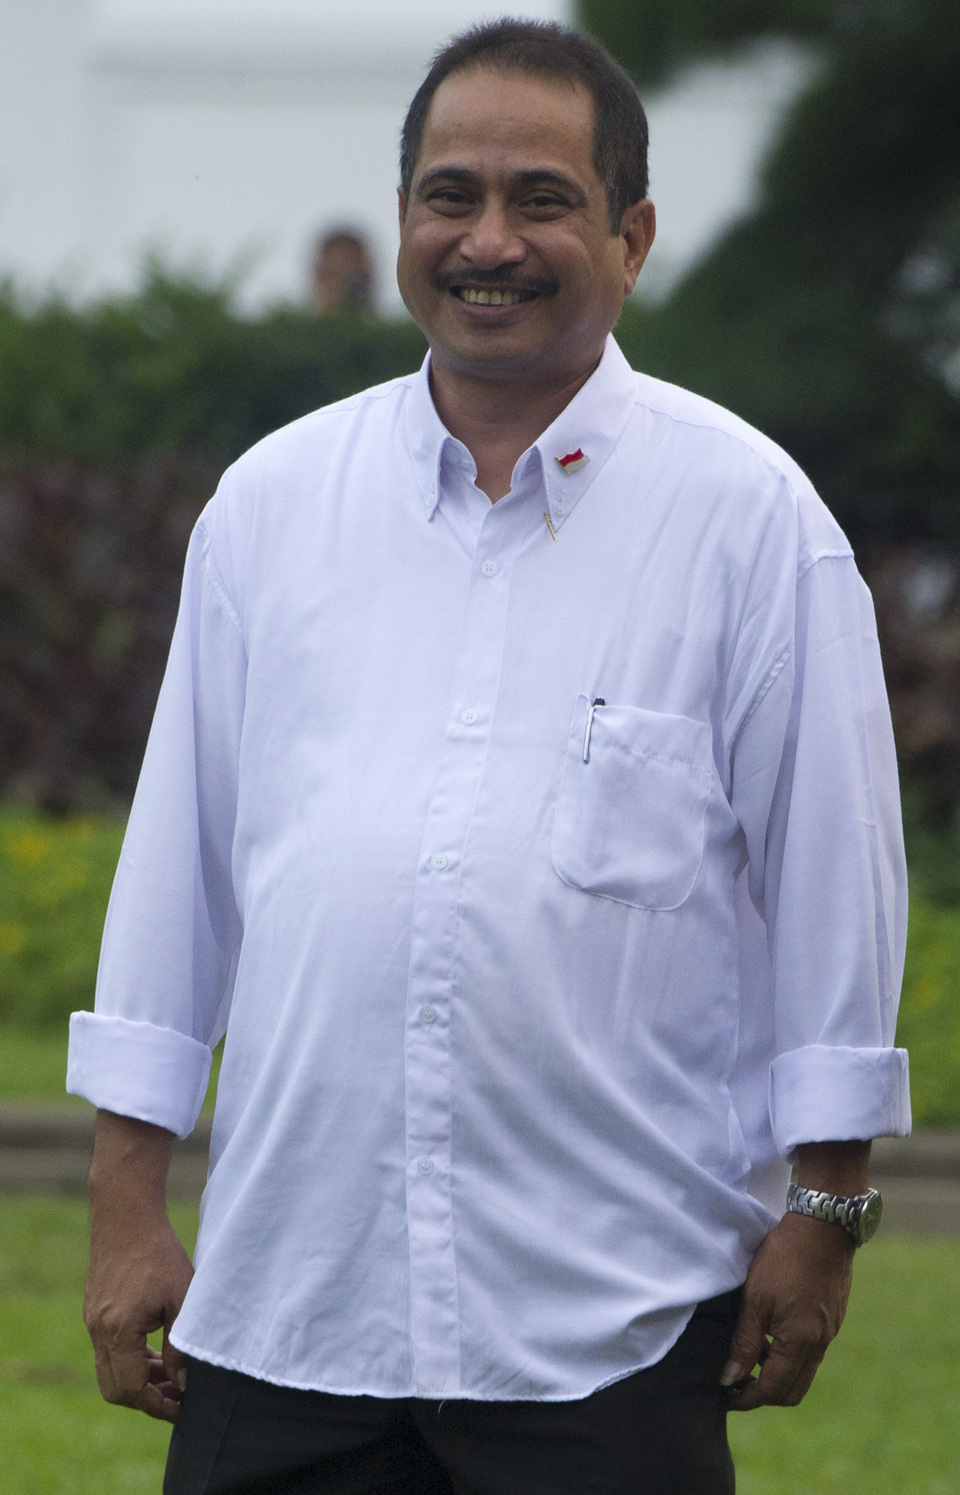 Menteri Pariwisata Arief Yahya